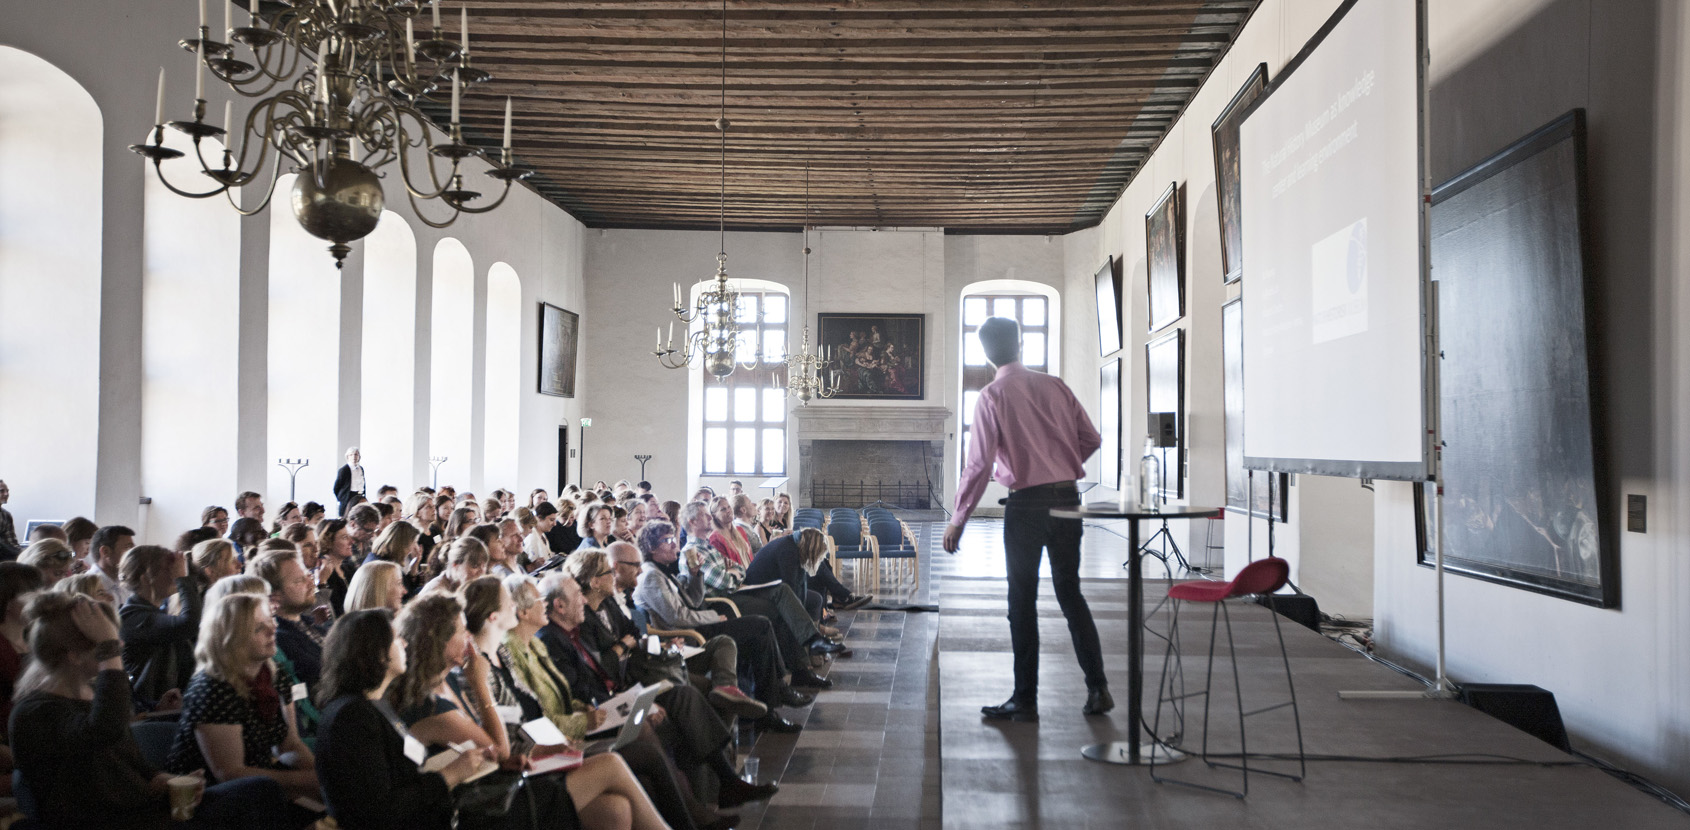 Konference at Kronborg Castle photo: Jon Norddahl